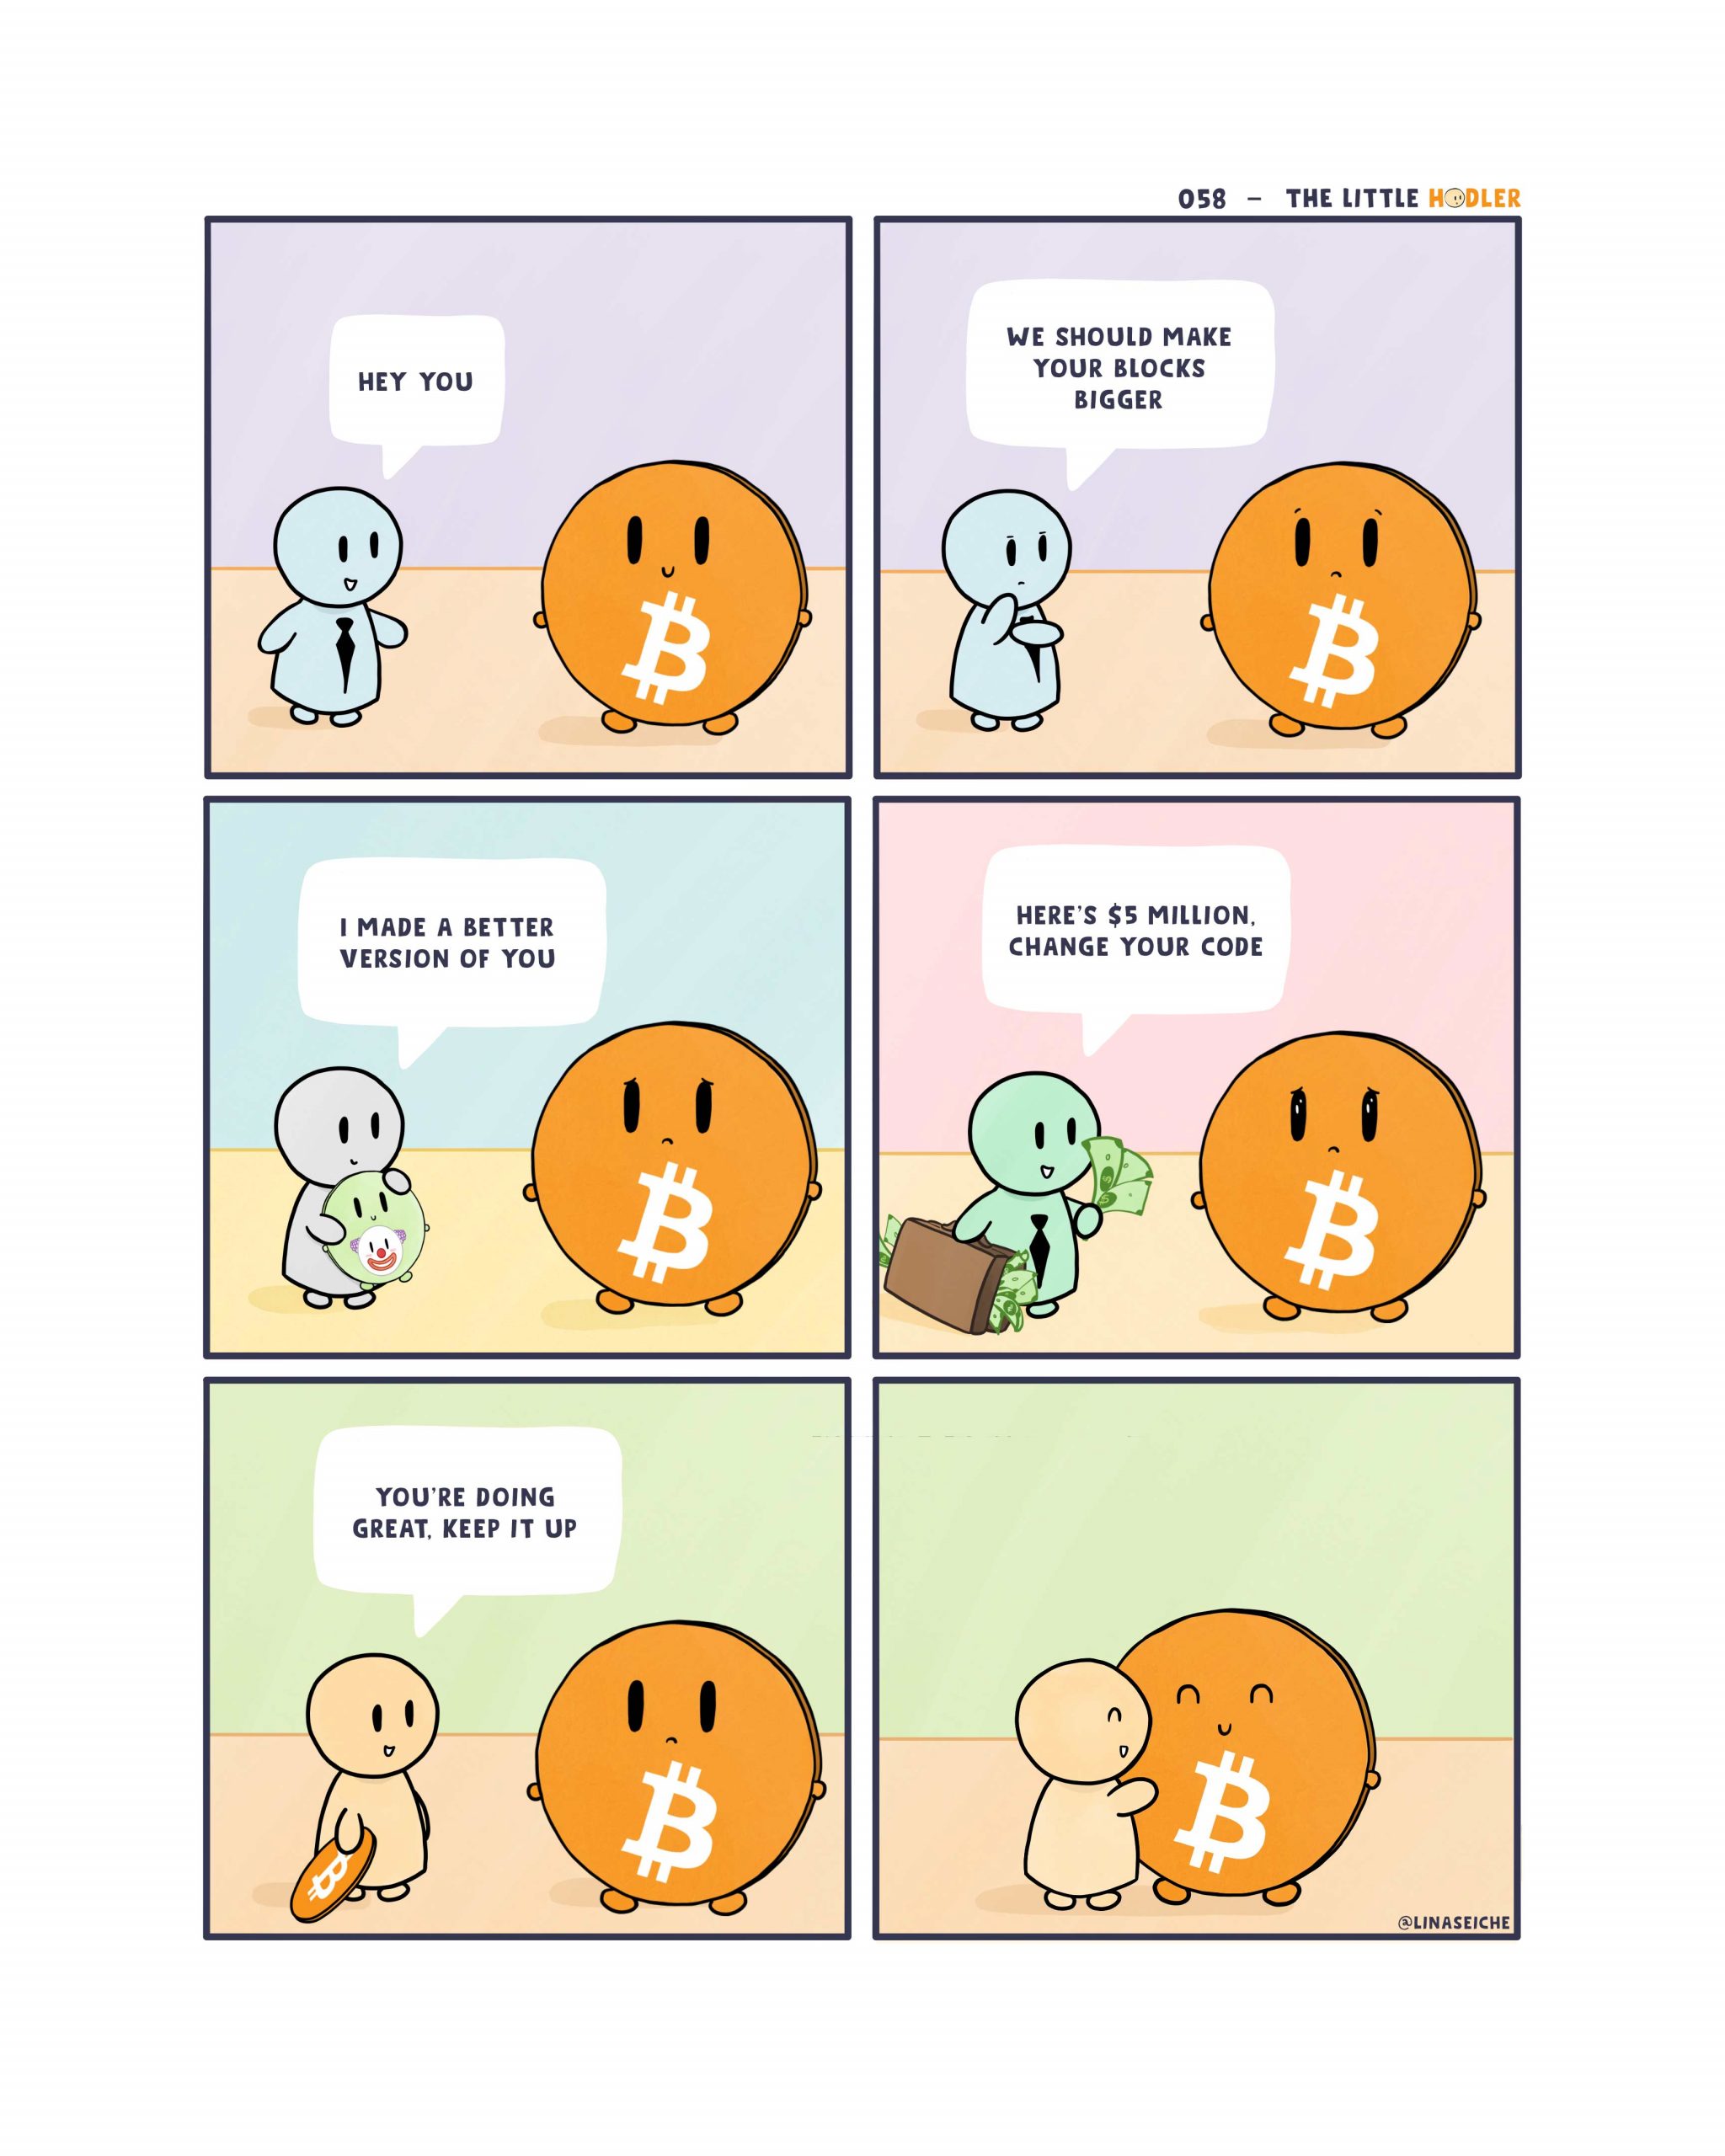 Bitcoin Change Code please....